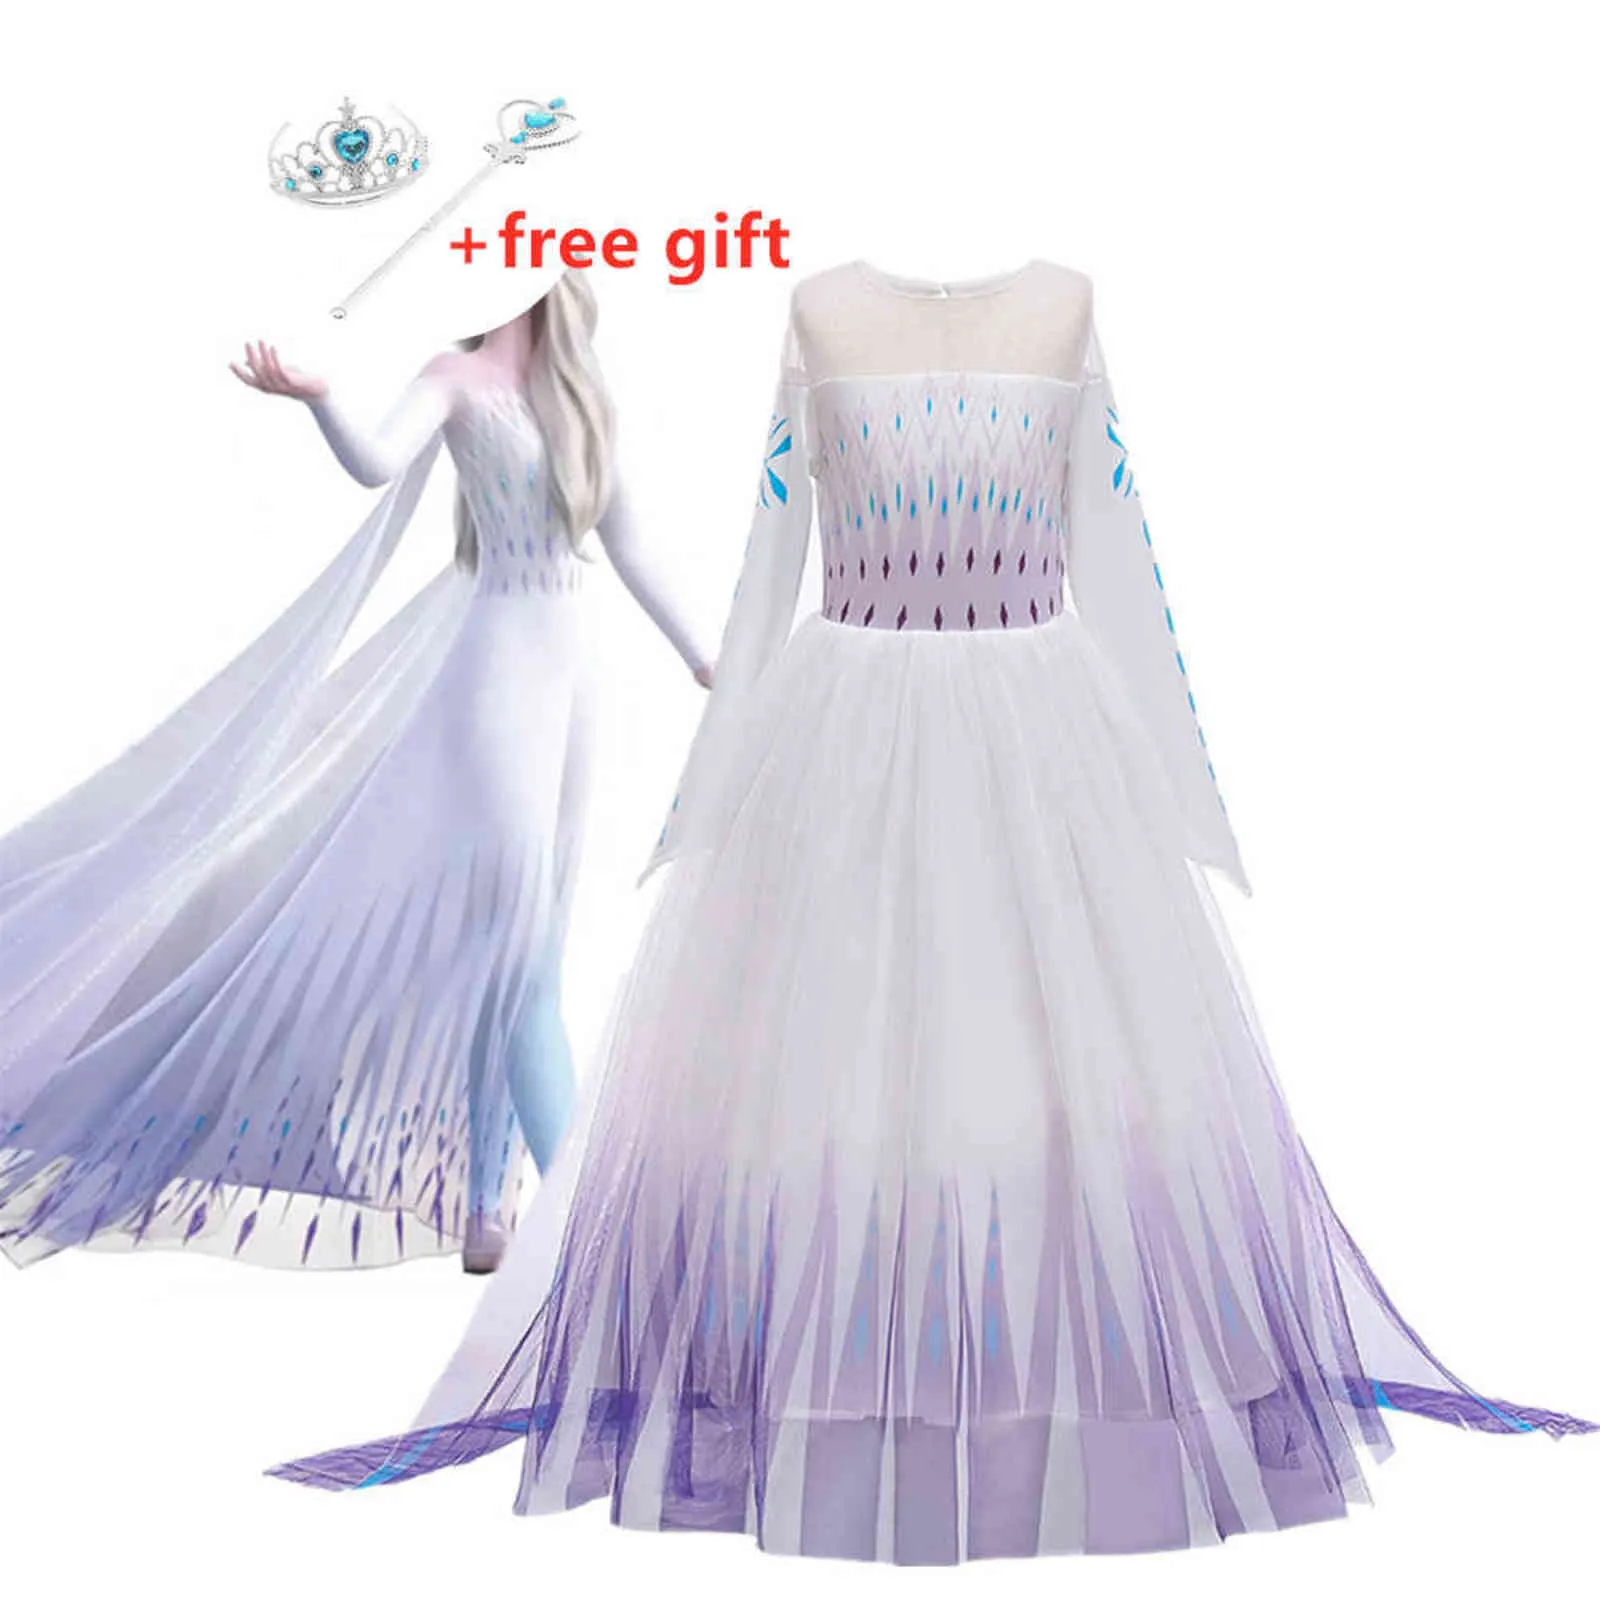 New Cosplay Princess Girl Dresses for Girls Festival Party Girls Dress Fantasy Baby Costume for photo shoot G1129